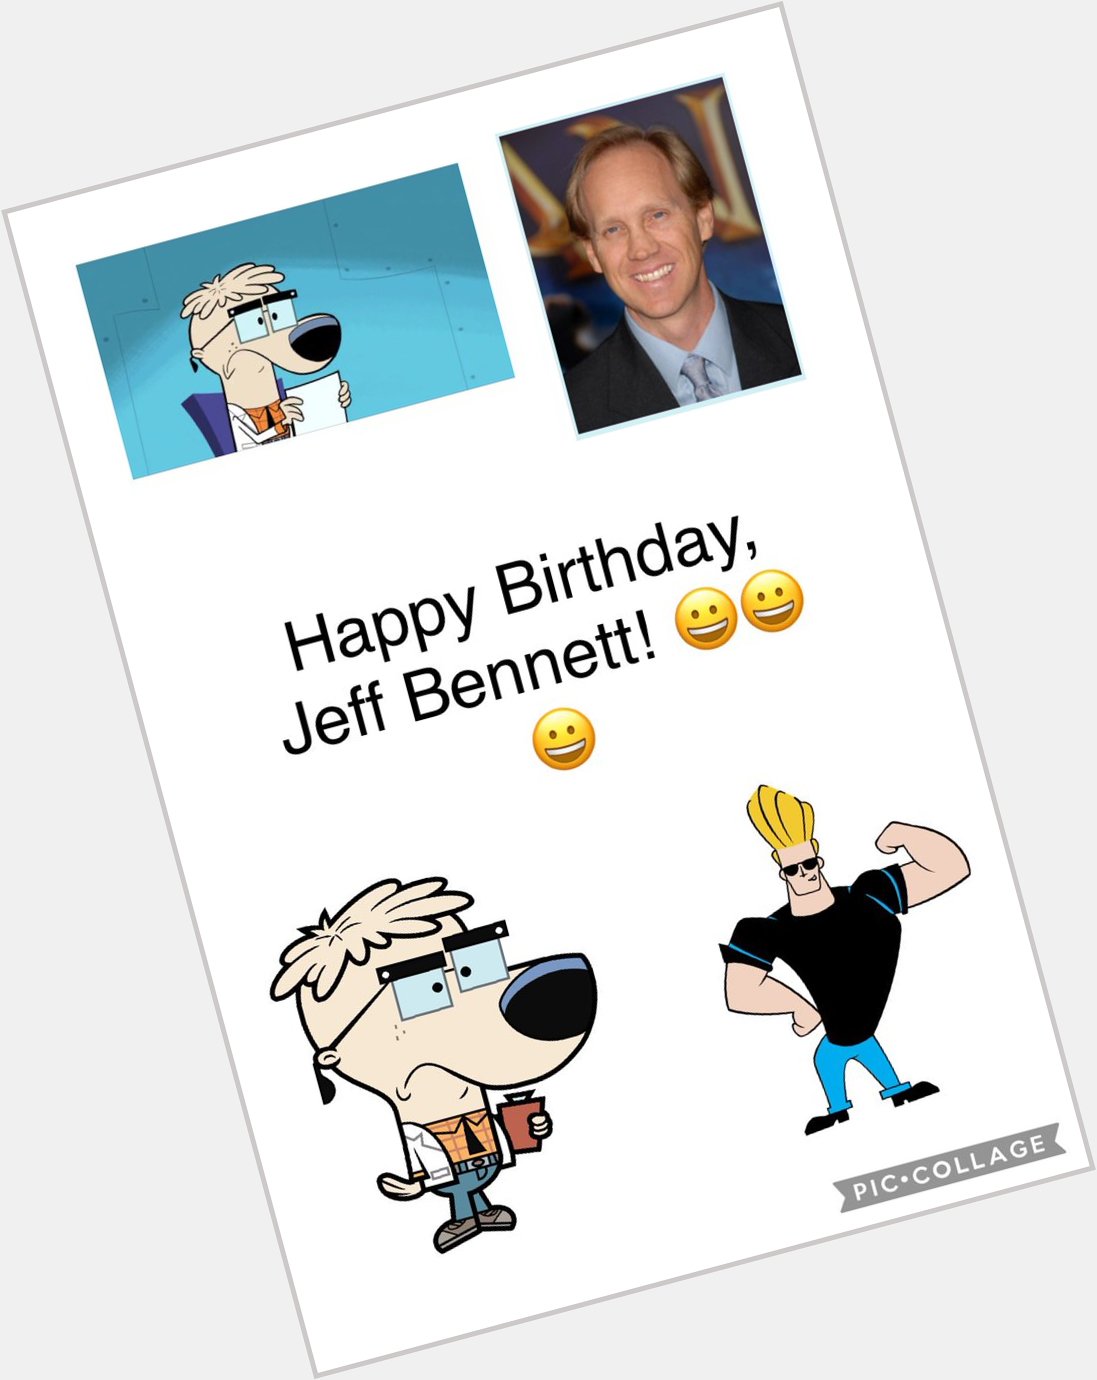 Happy Birthday Jeff Bennett!!  